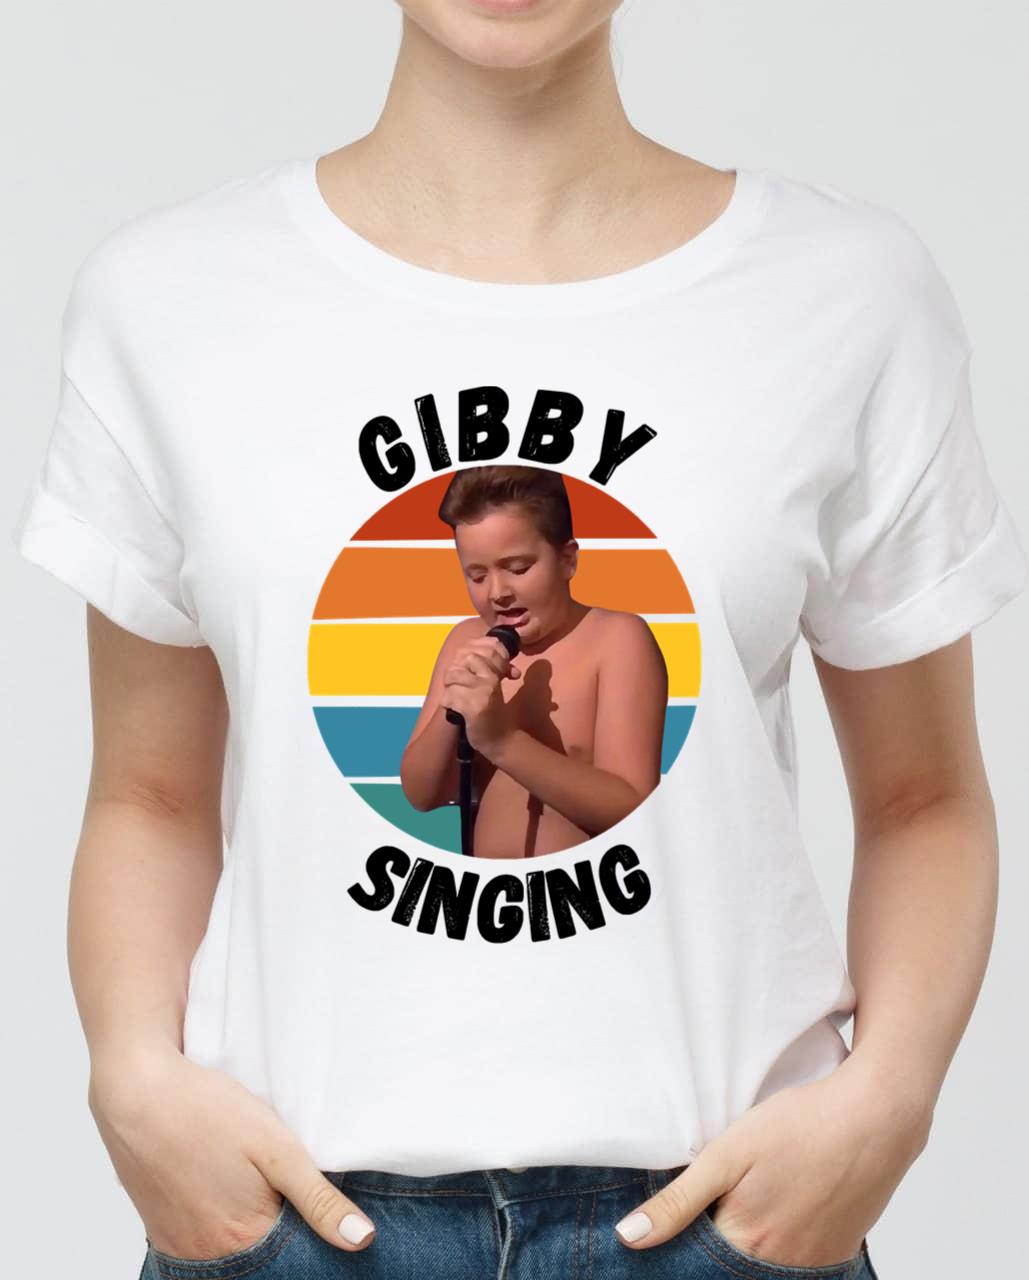 Singing Gibby Retro T-Shirt